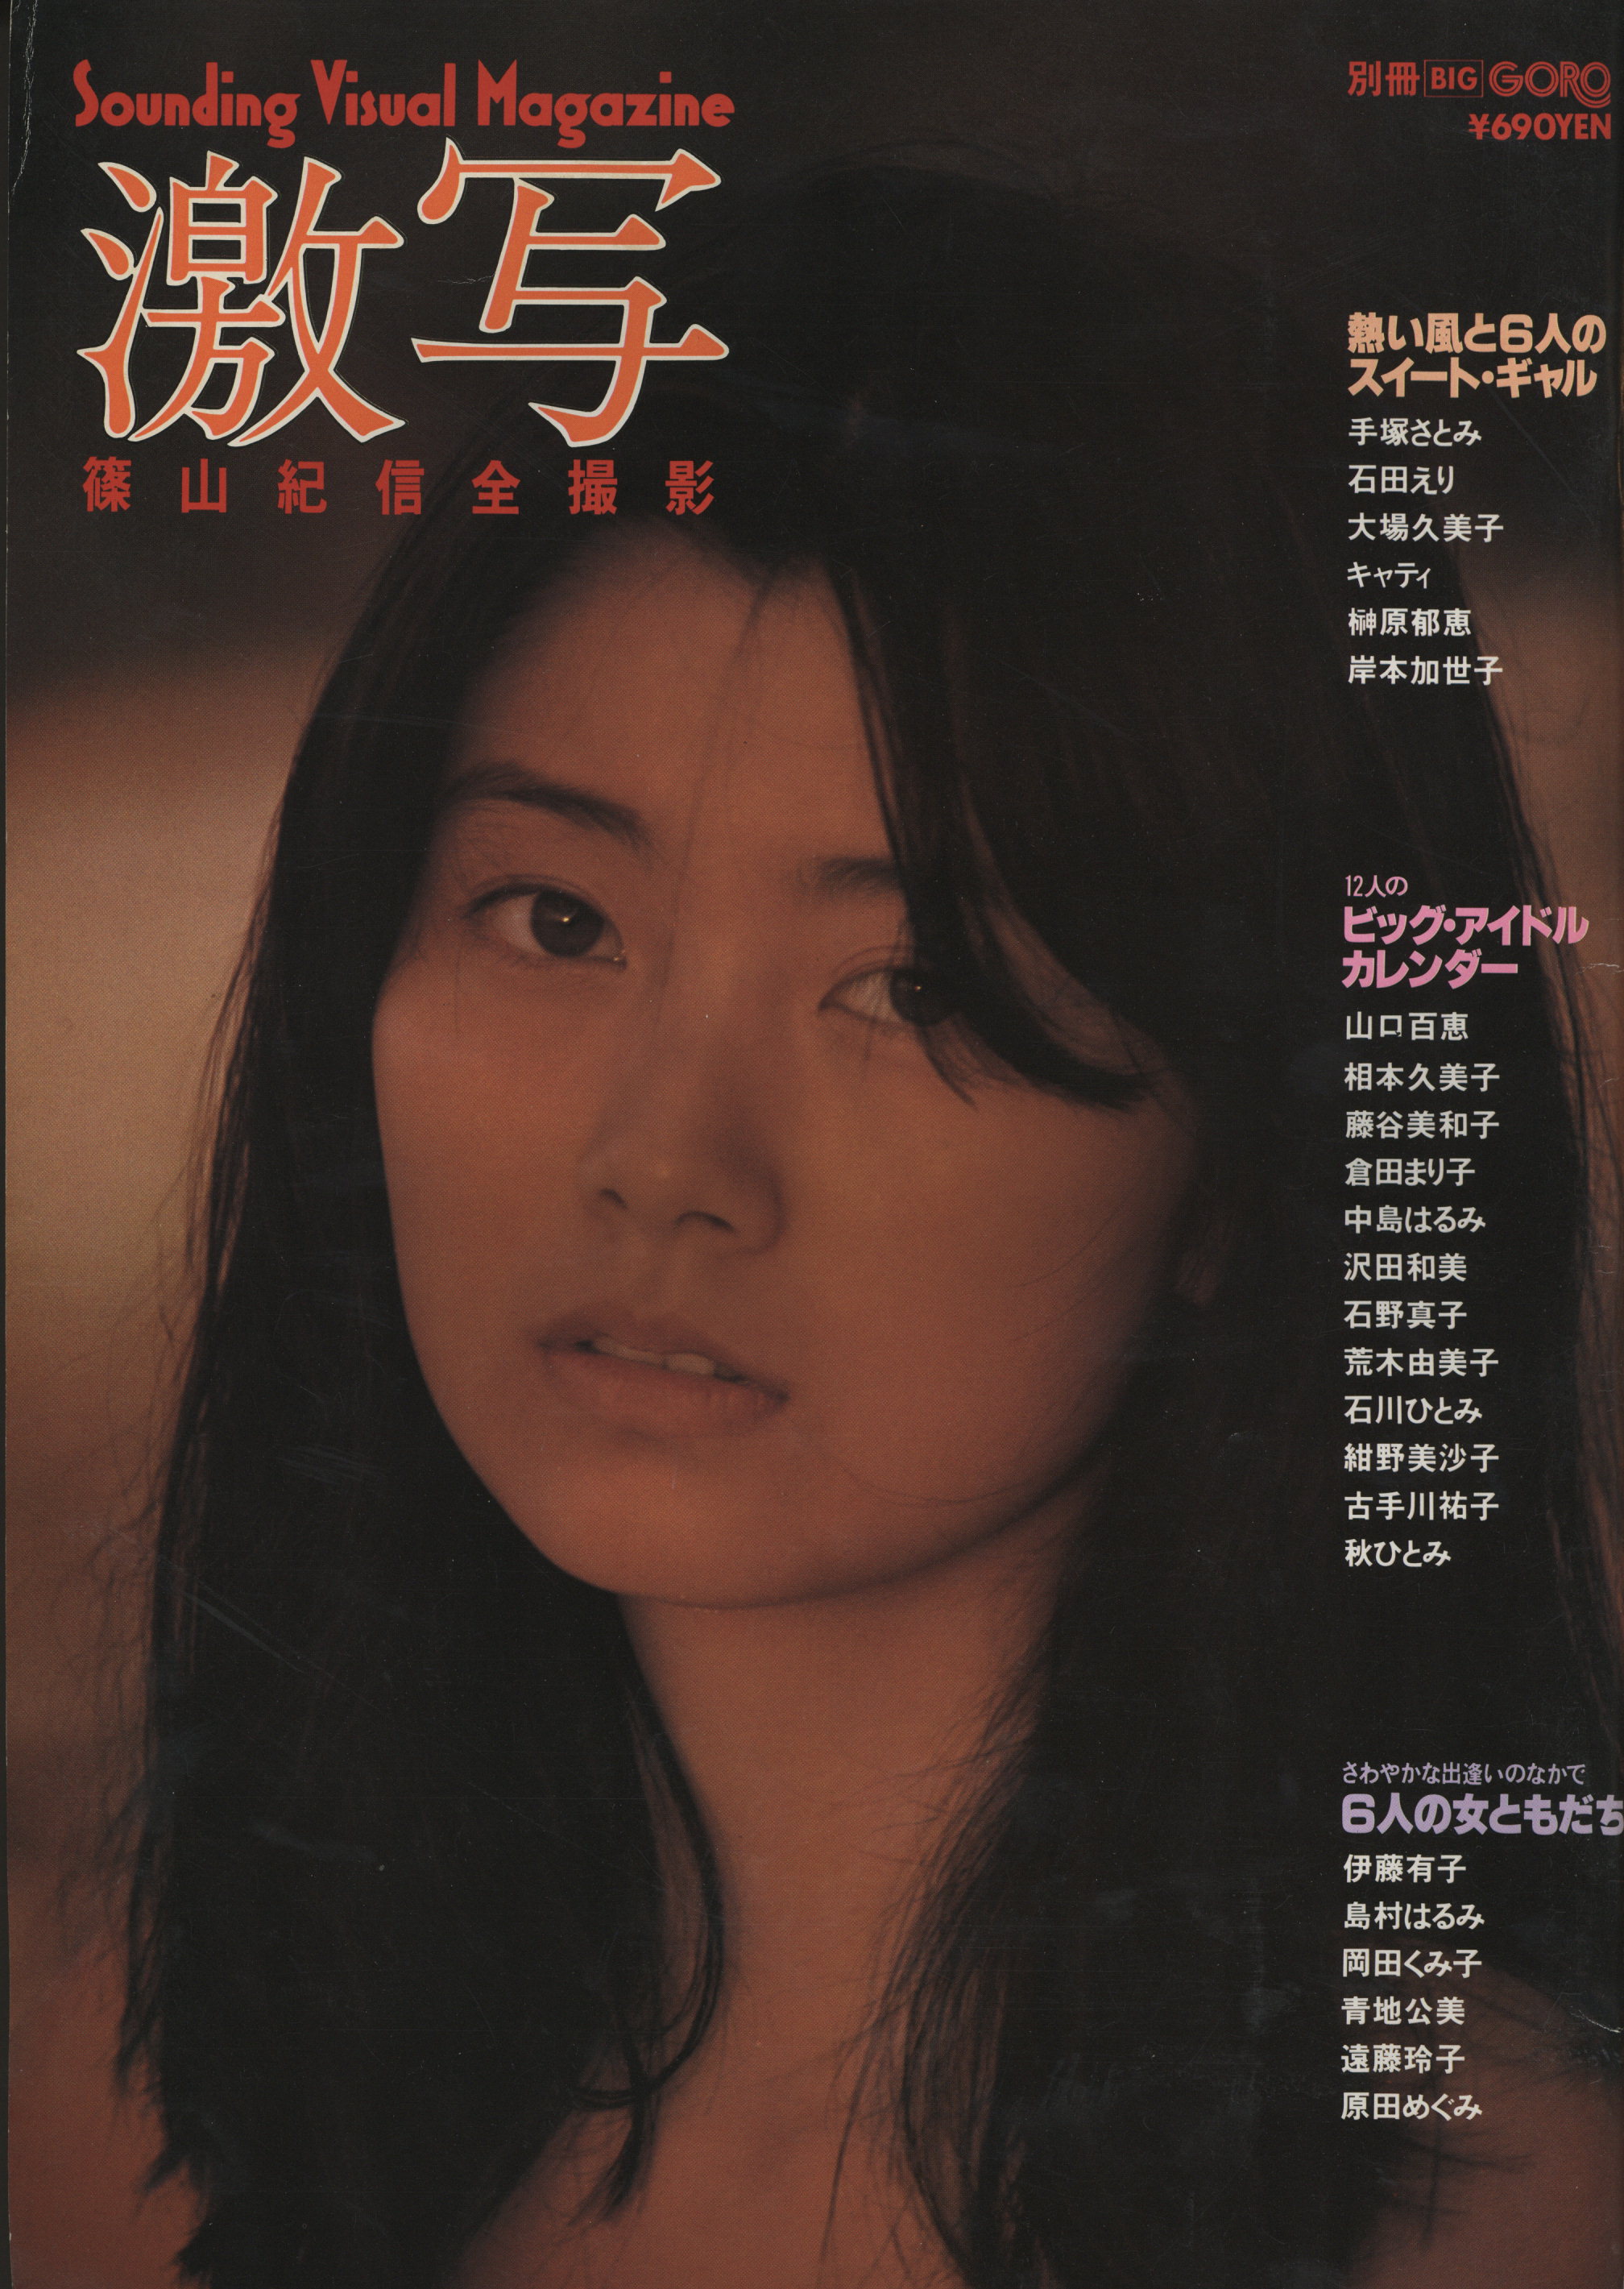 Kishin Shinoyama Shooting Gekisha Separate Goro1980 Big May Edition Pinup Missing 8005 And The Mandarake 在线商店